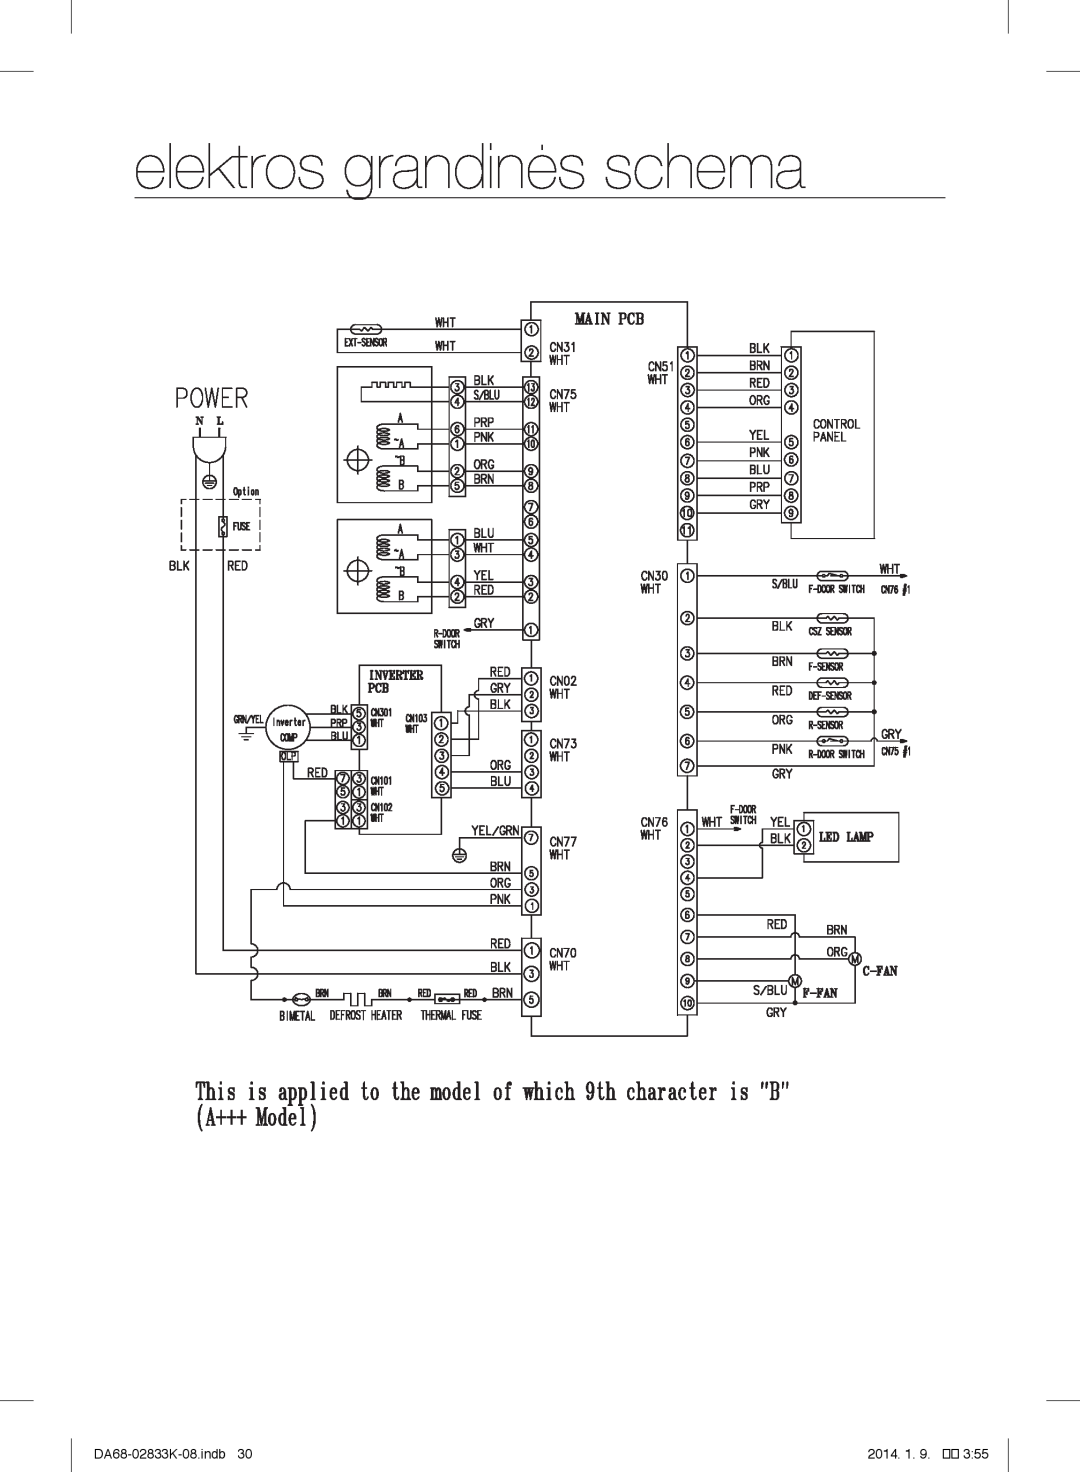 Samsung RB31HER2BSA/EF, RB29FSRNDEF/EF, RB31FSRNDSS/EF manual elektros grandinės schema, DA68-02833K-08.indb, 2014. 1 